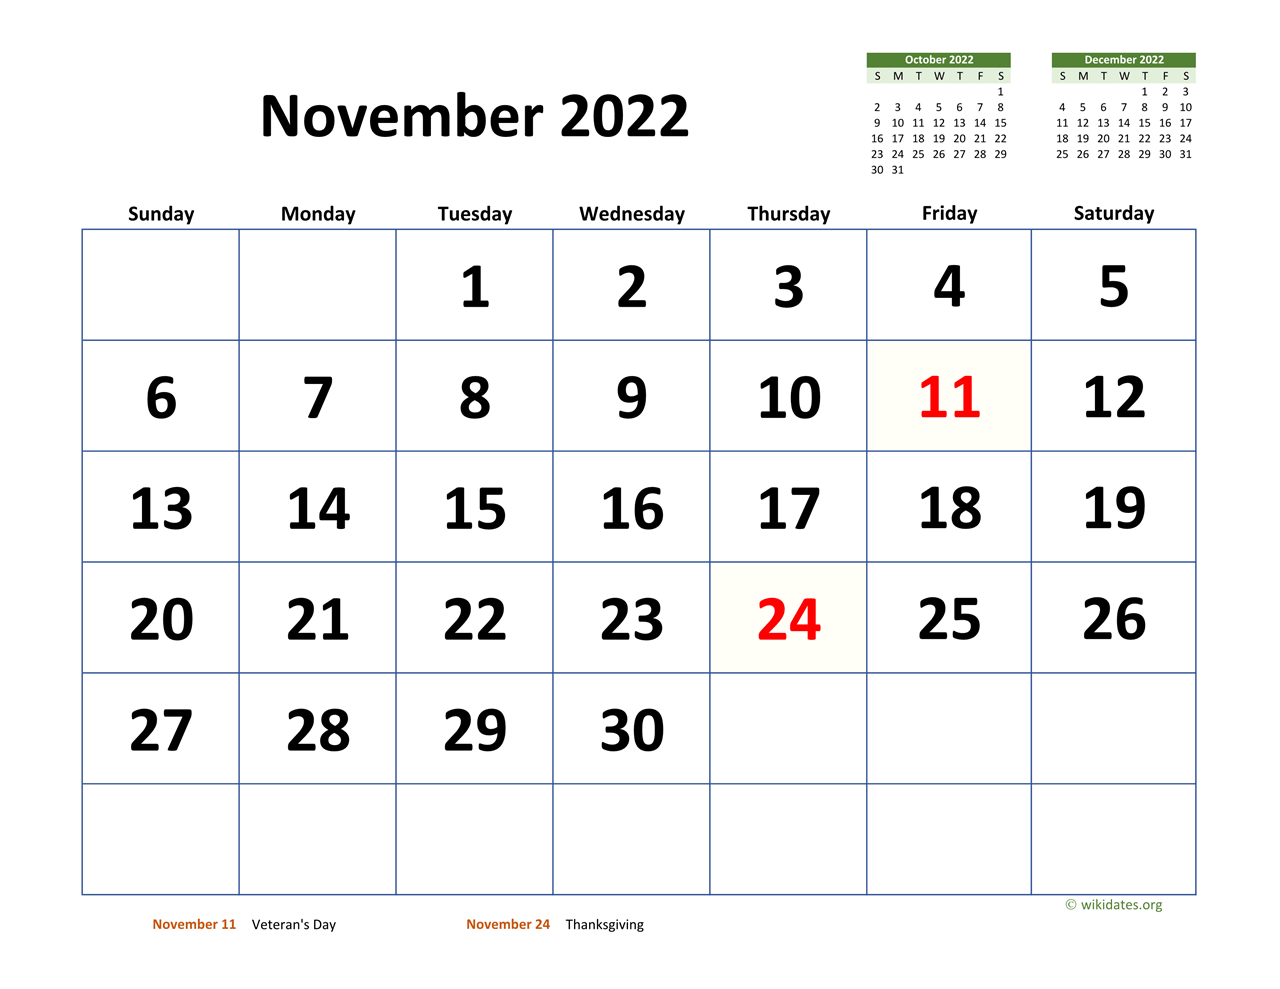 November 2022 Calendar November 2022 Calendar With Extra-Large Dates | Wikidates.org